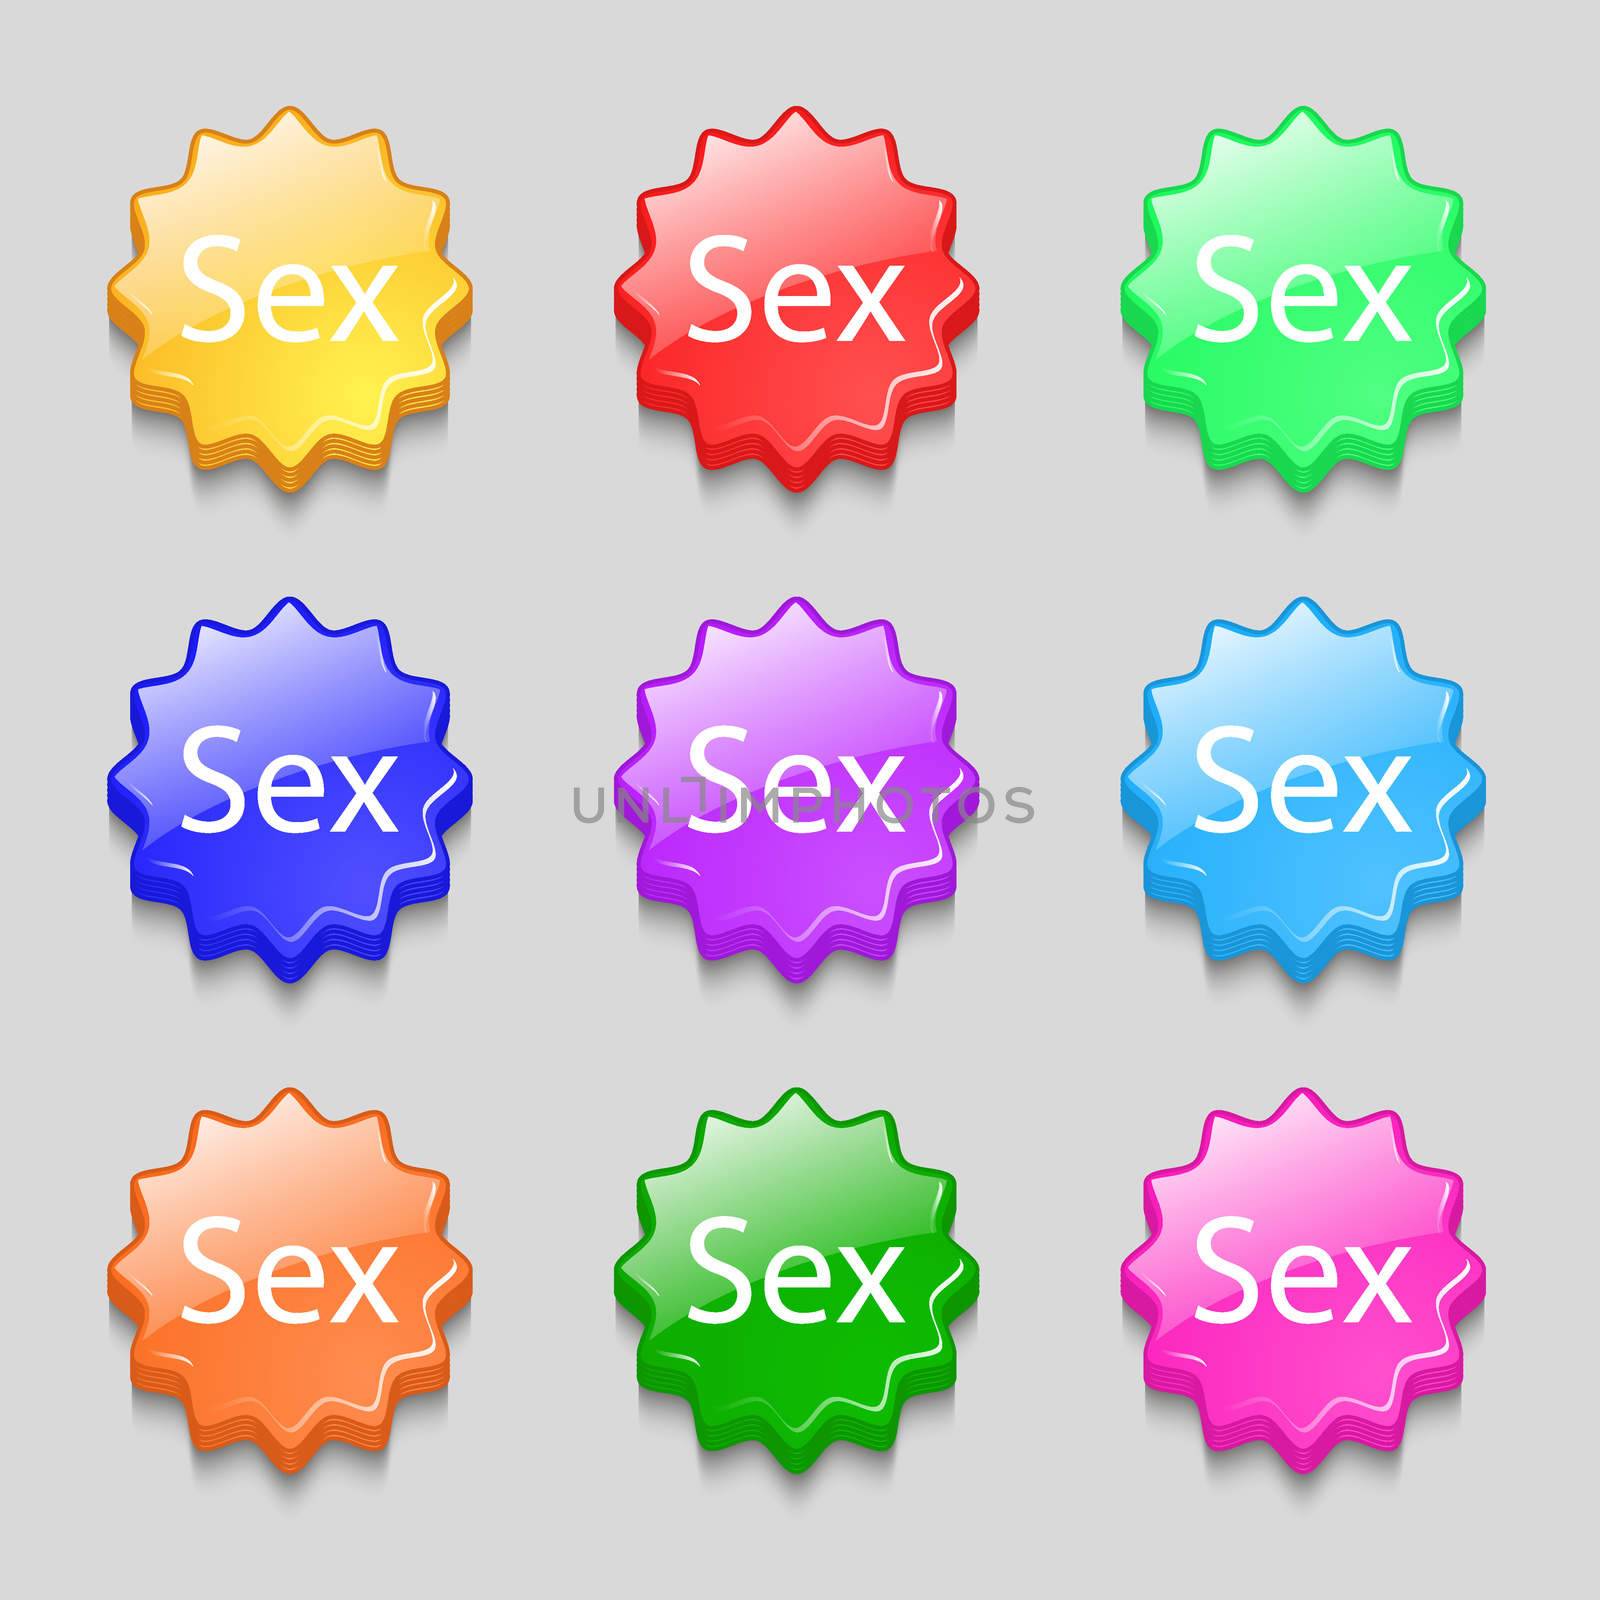 Safe love sign icon. Safe sex symbol. Symbols on nine wavy colourful buttons. illustration